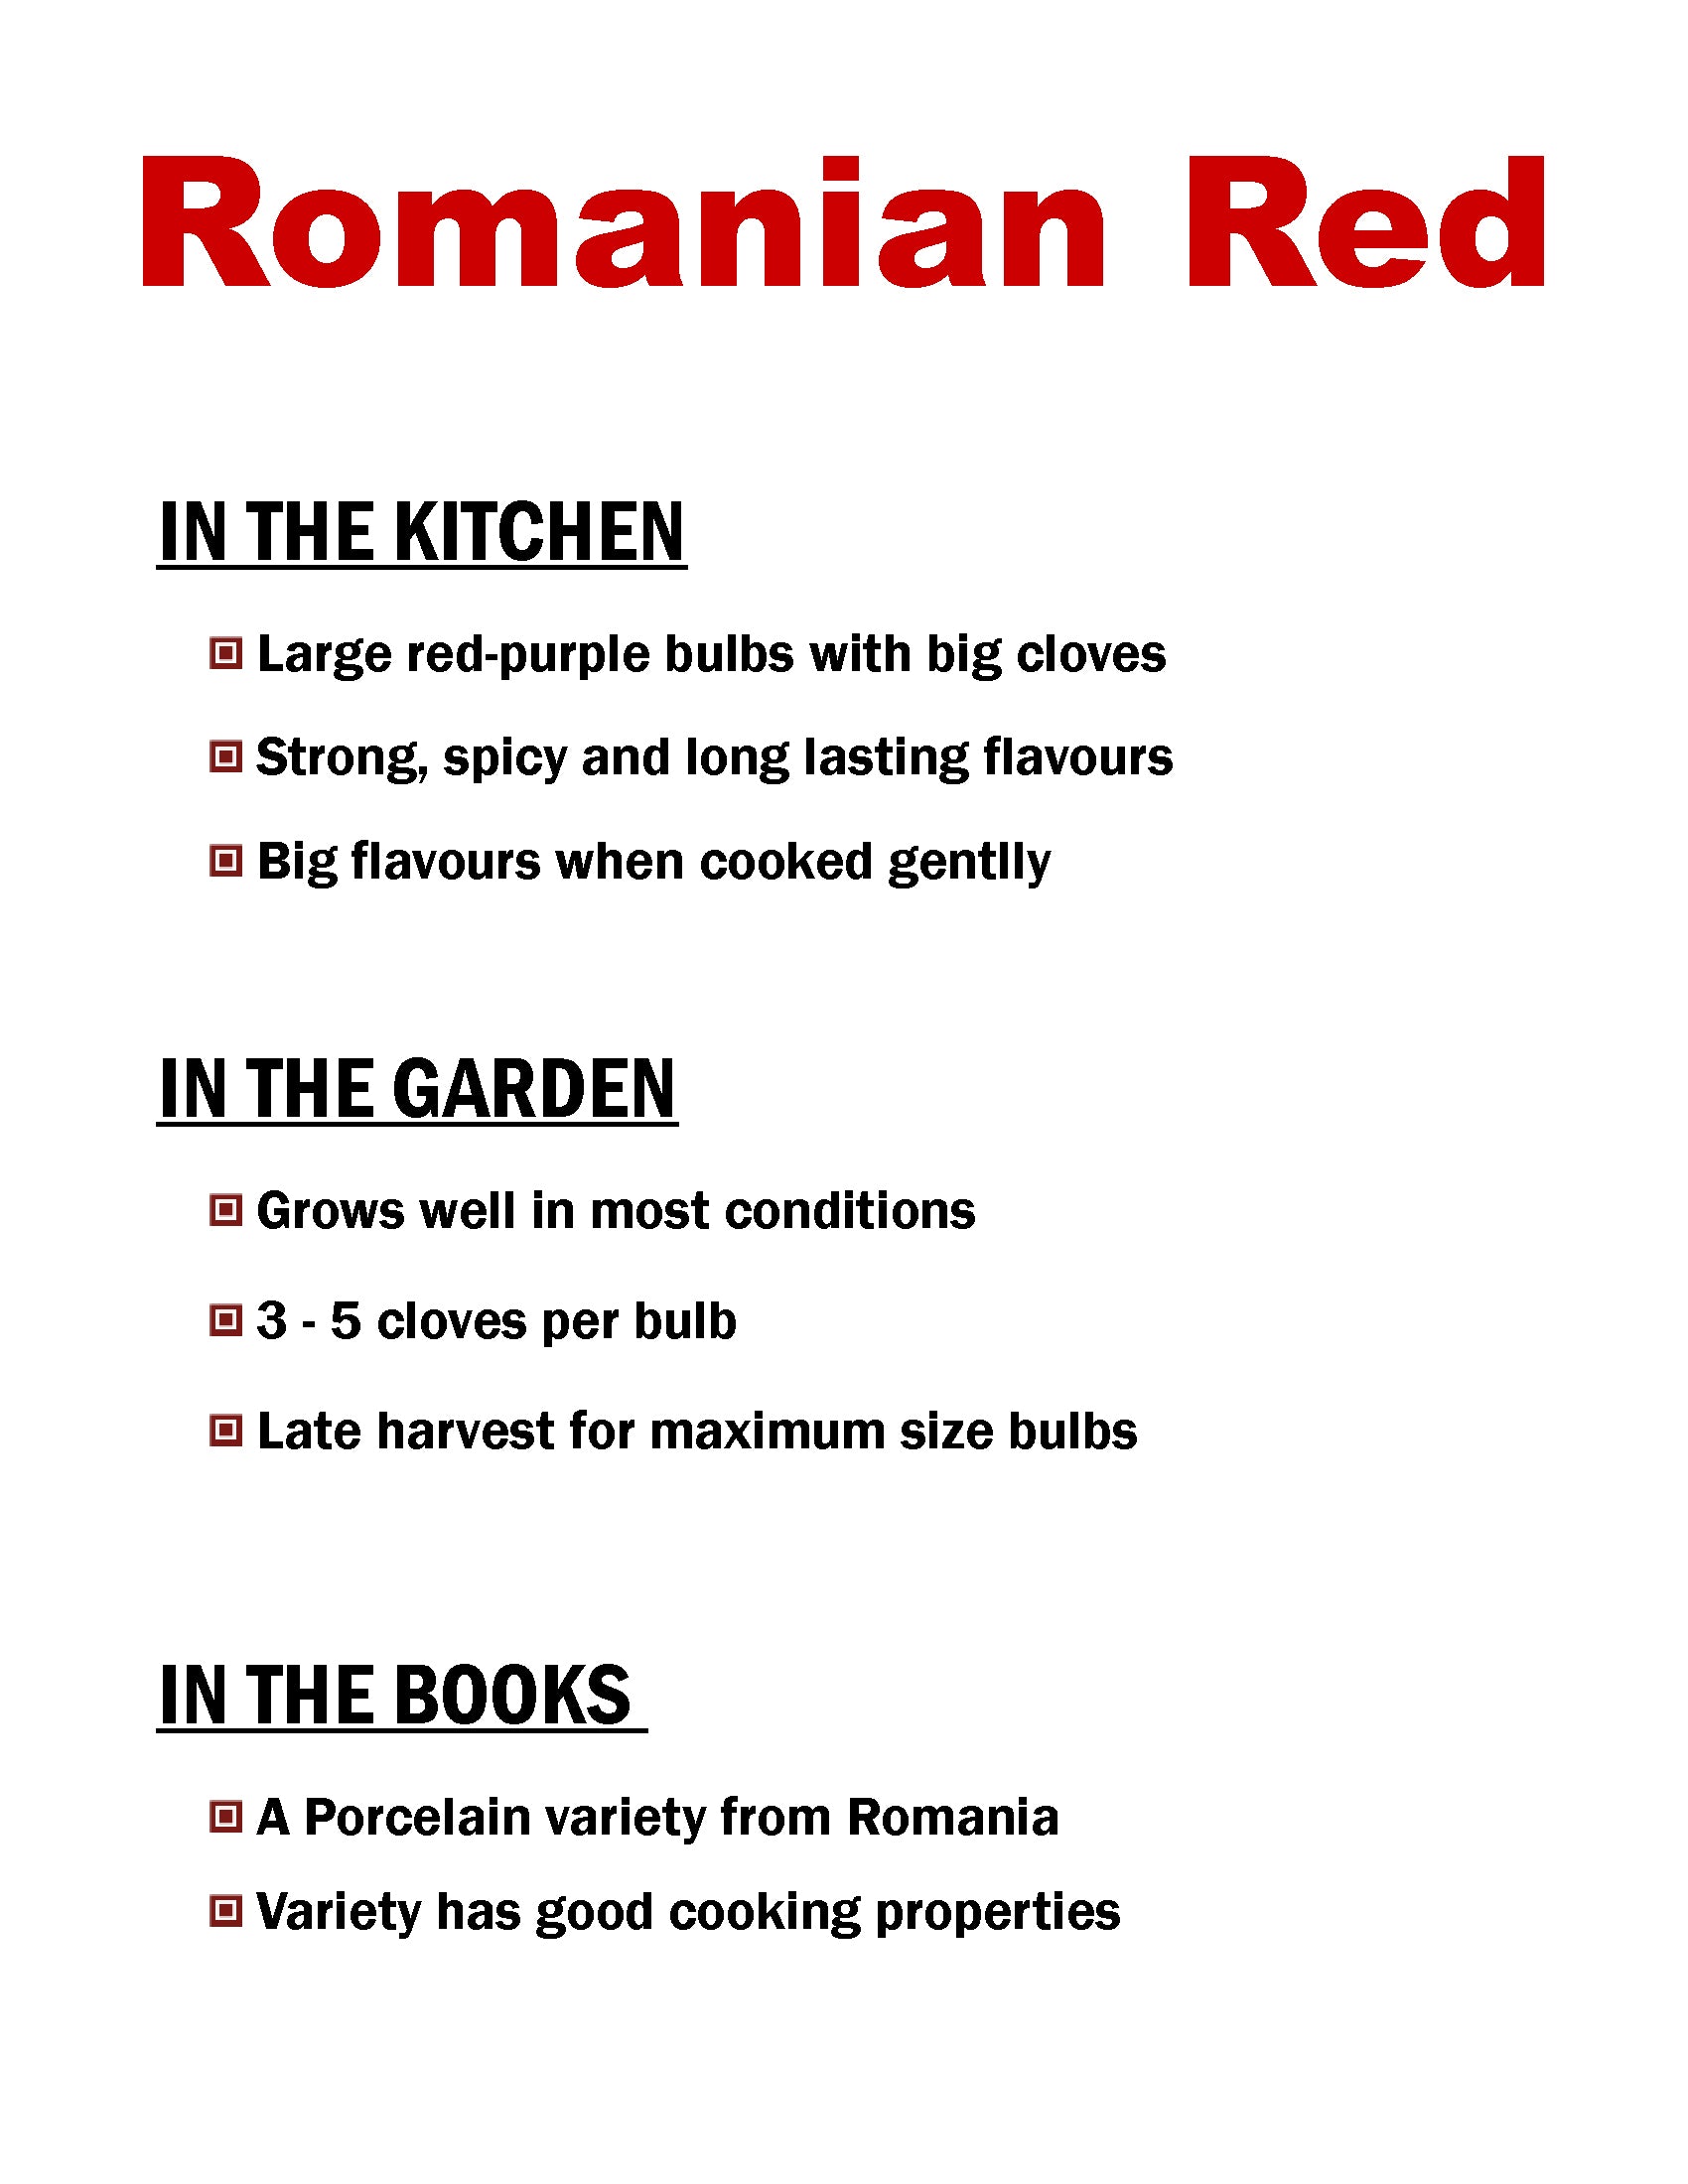 Romanian Red, Porcelain garlic description card by Garlicloves